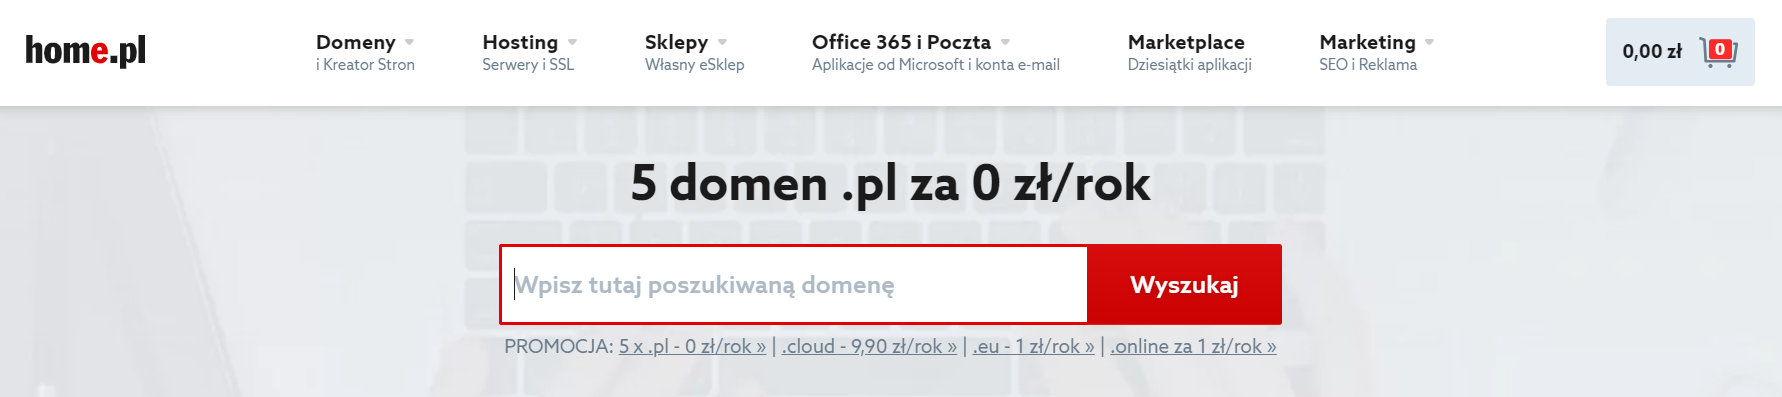 Home.pl - Select Domains